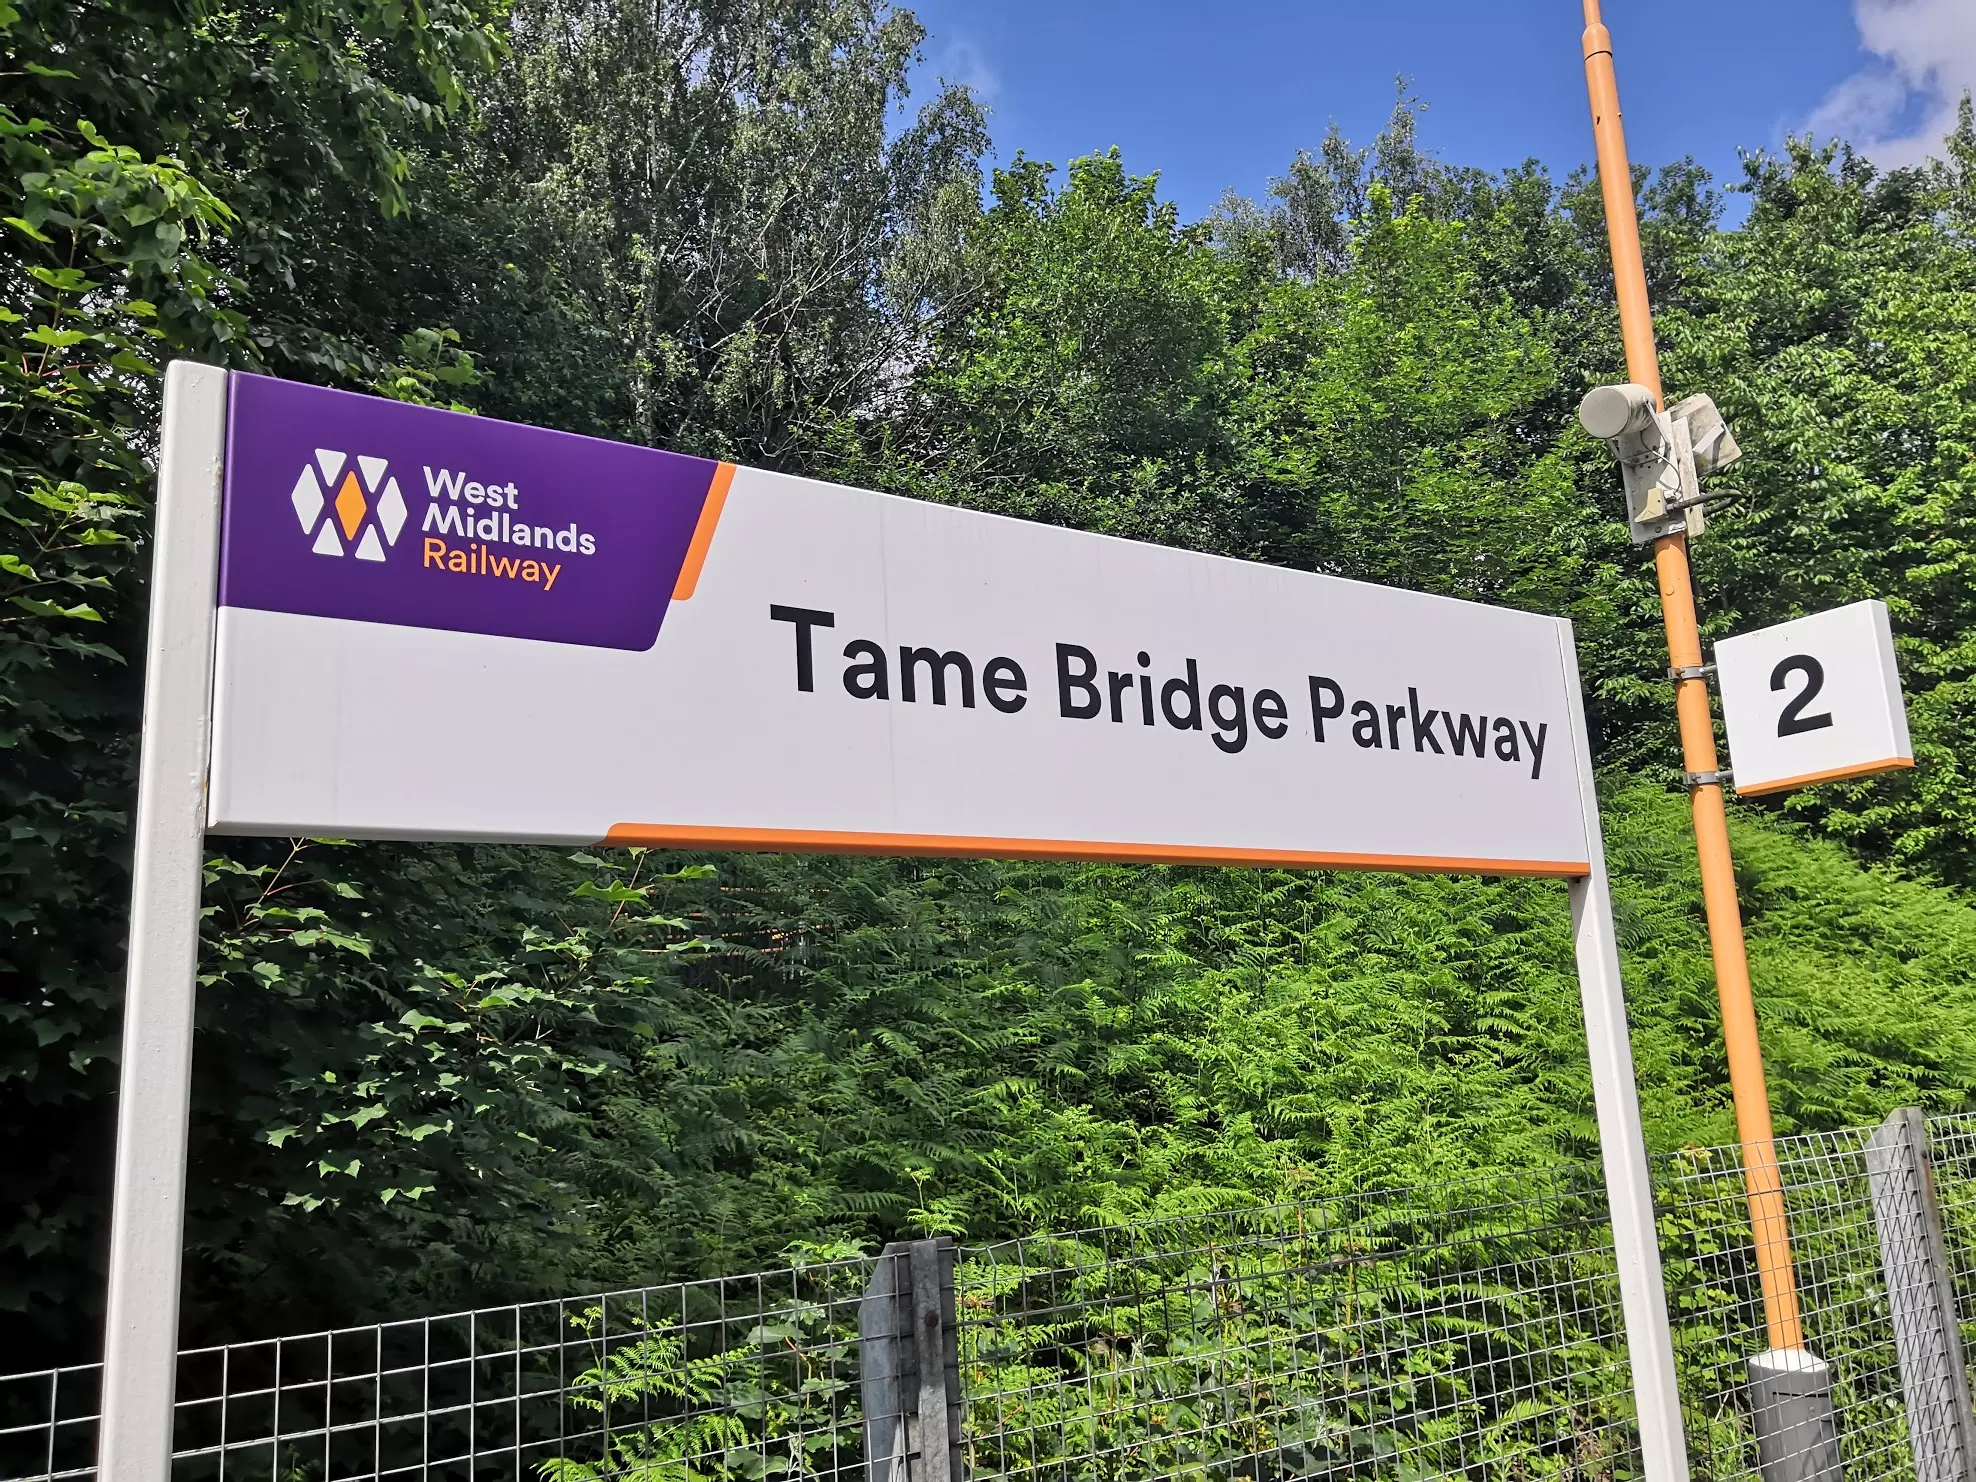 Tame Bridge Parkway